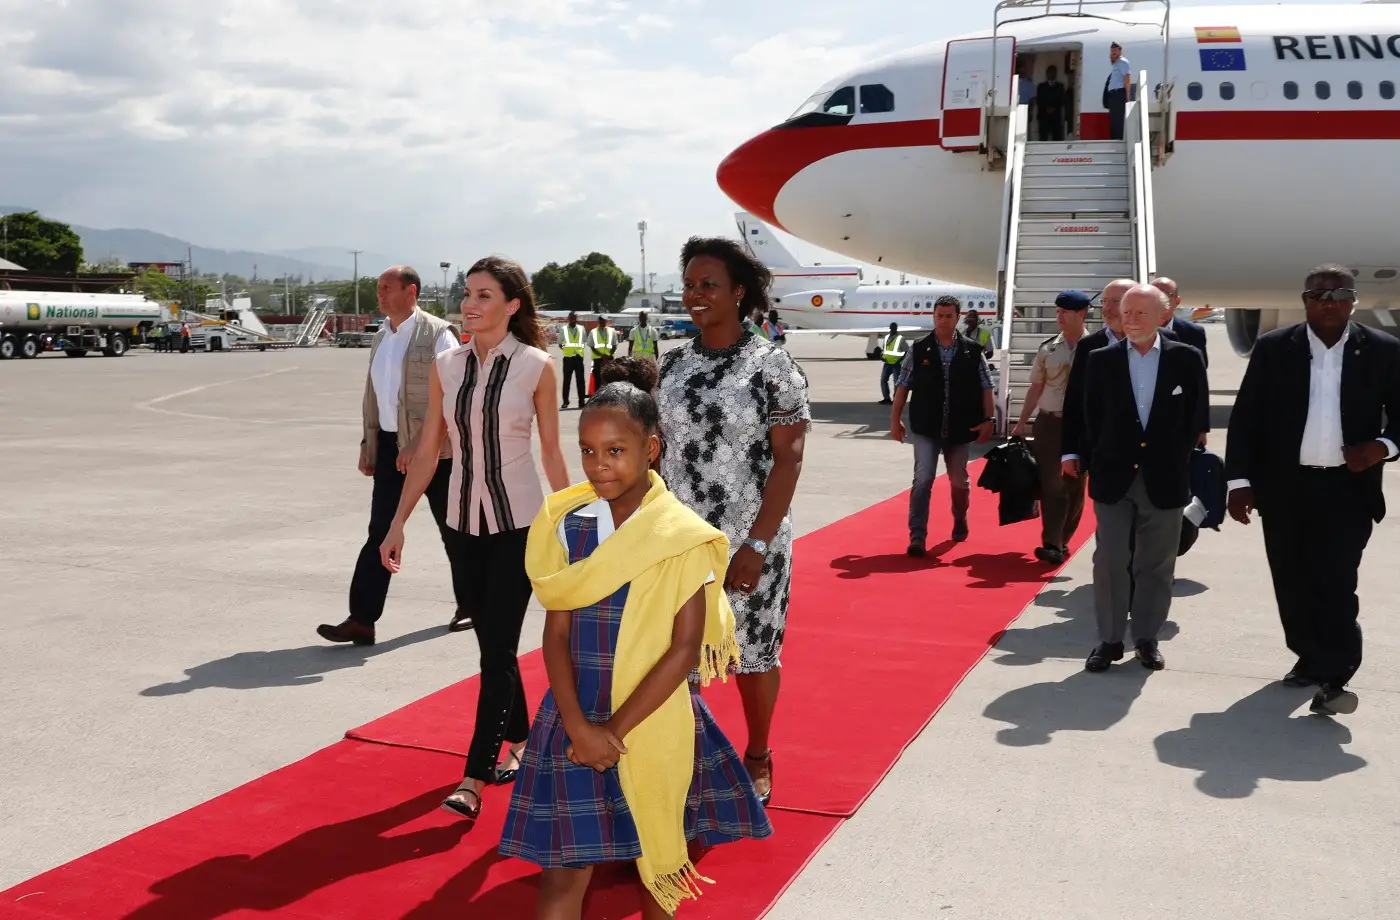 Queen Letizia arrived in Republic of Haiti for the Cooperation Visit